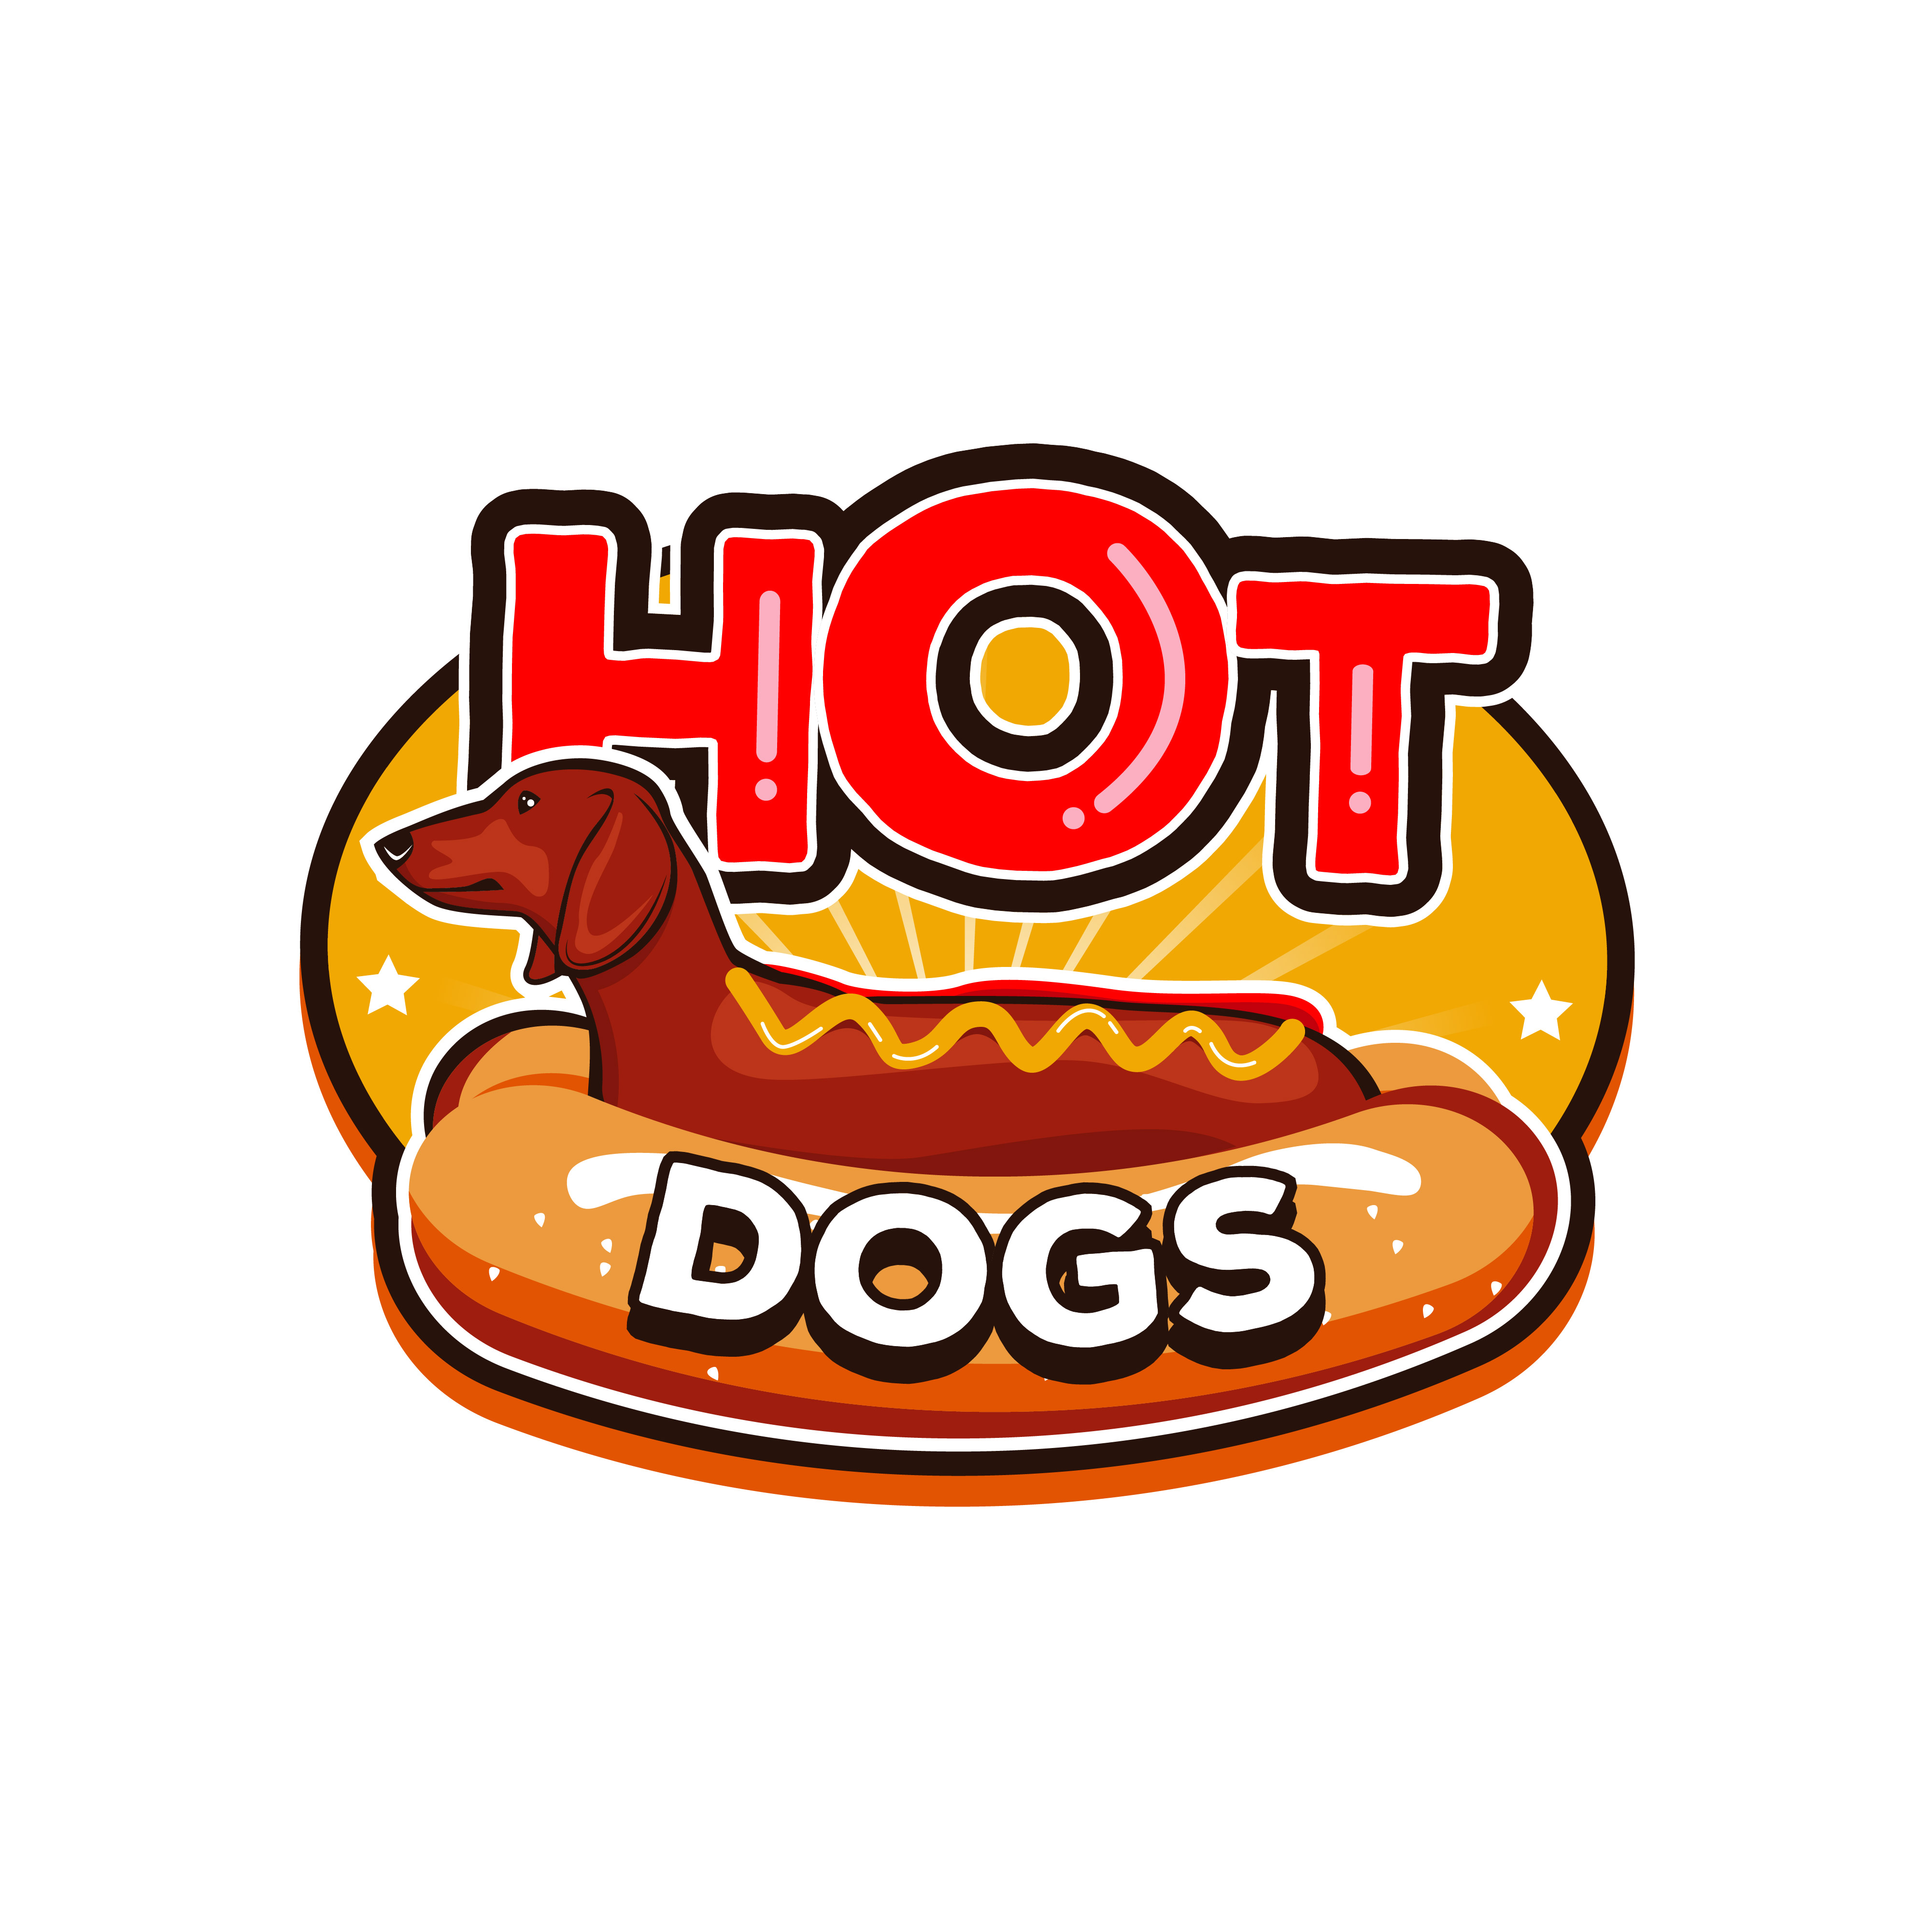 Hot Dog Weiner Dog Logo Download Free Vectors Clipart Graphics